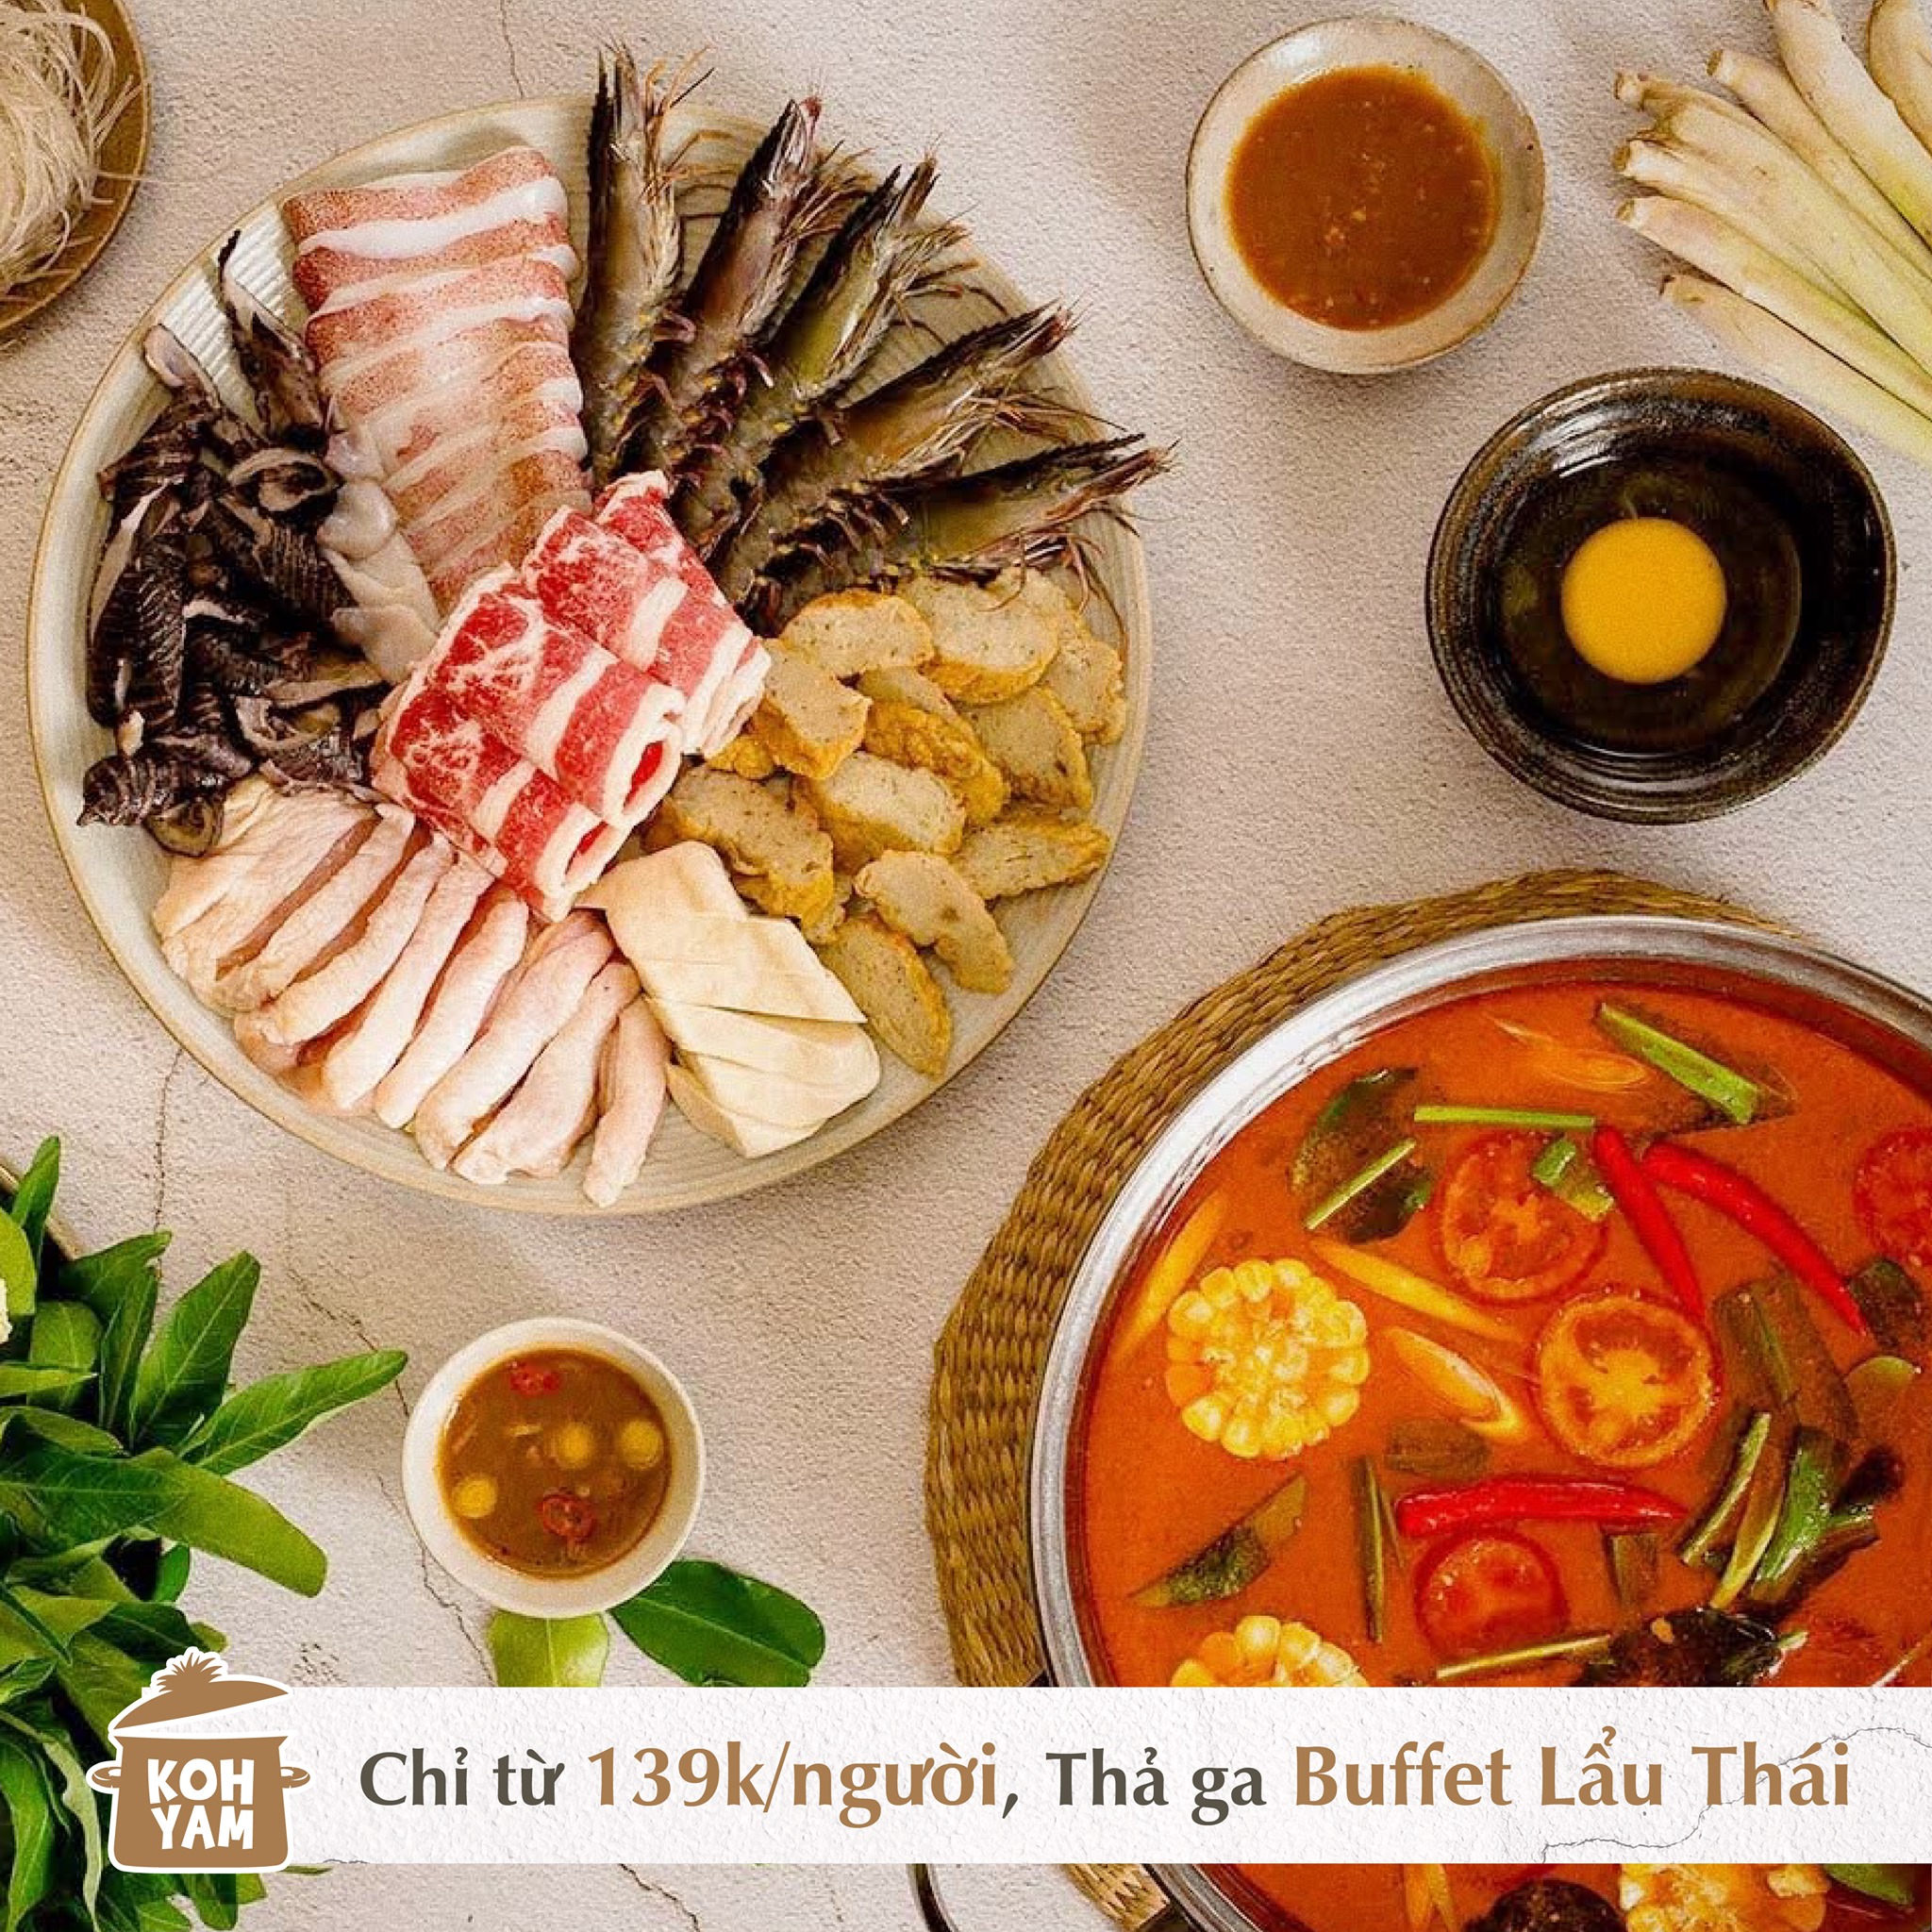 buffet lau ha noi Thai Koh Yam